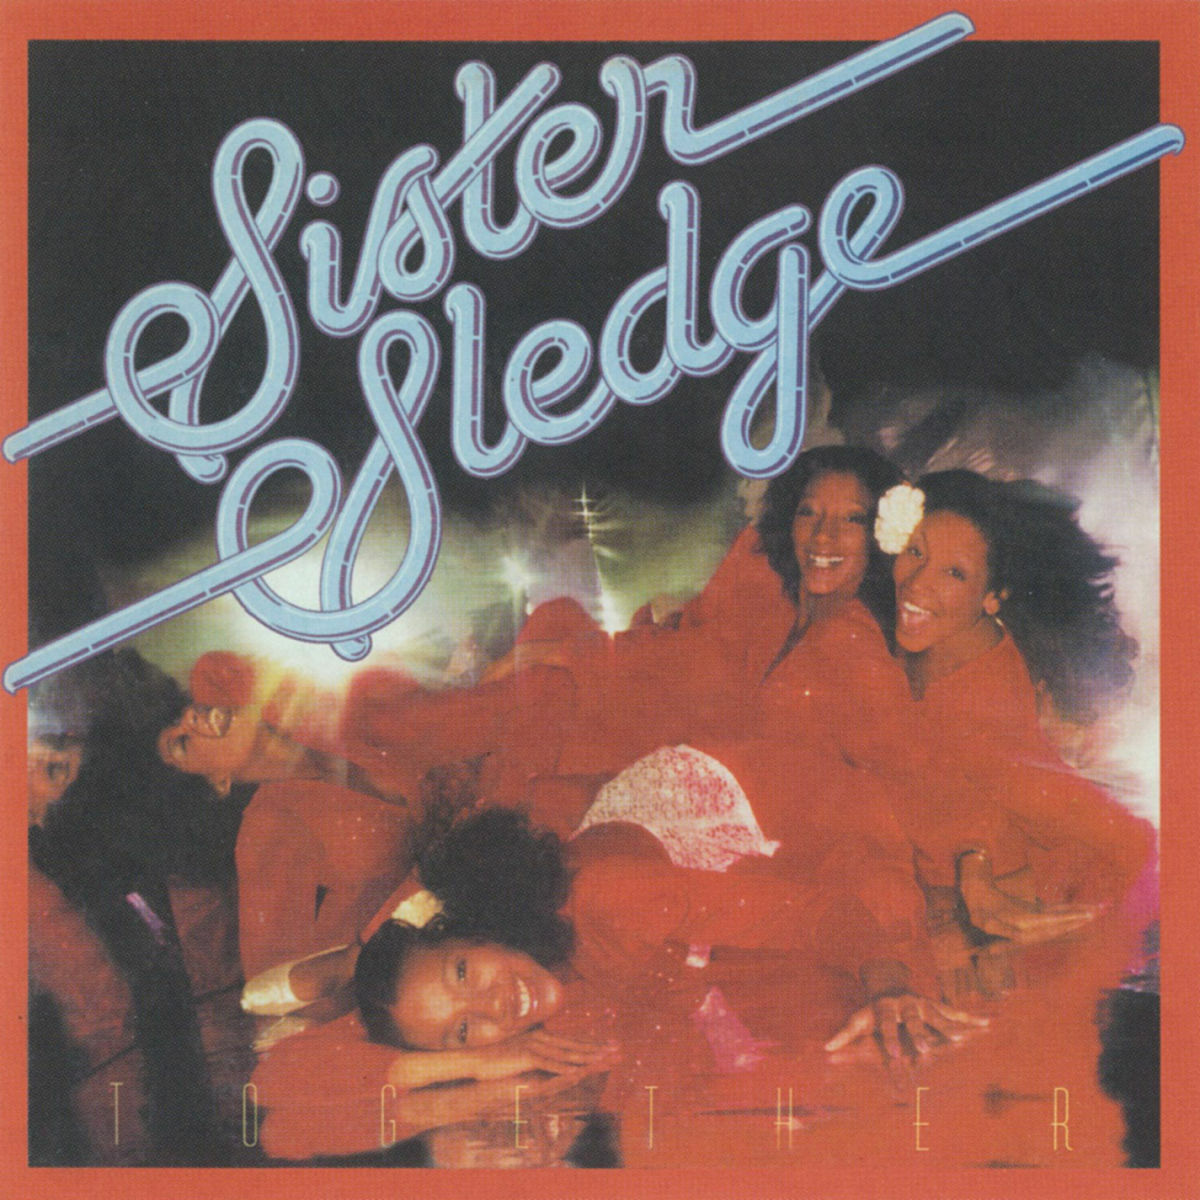 Sister Sledge: albums, songs, playlists | Listen on Deezer